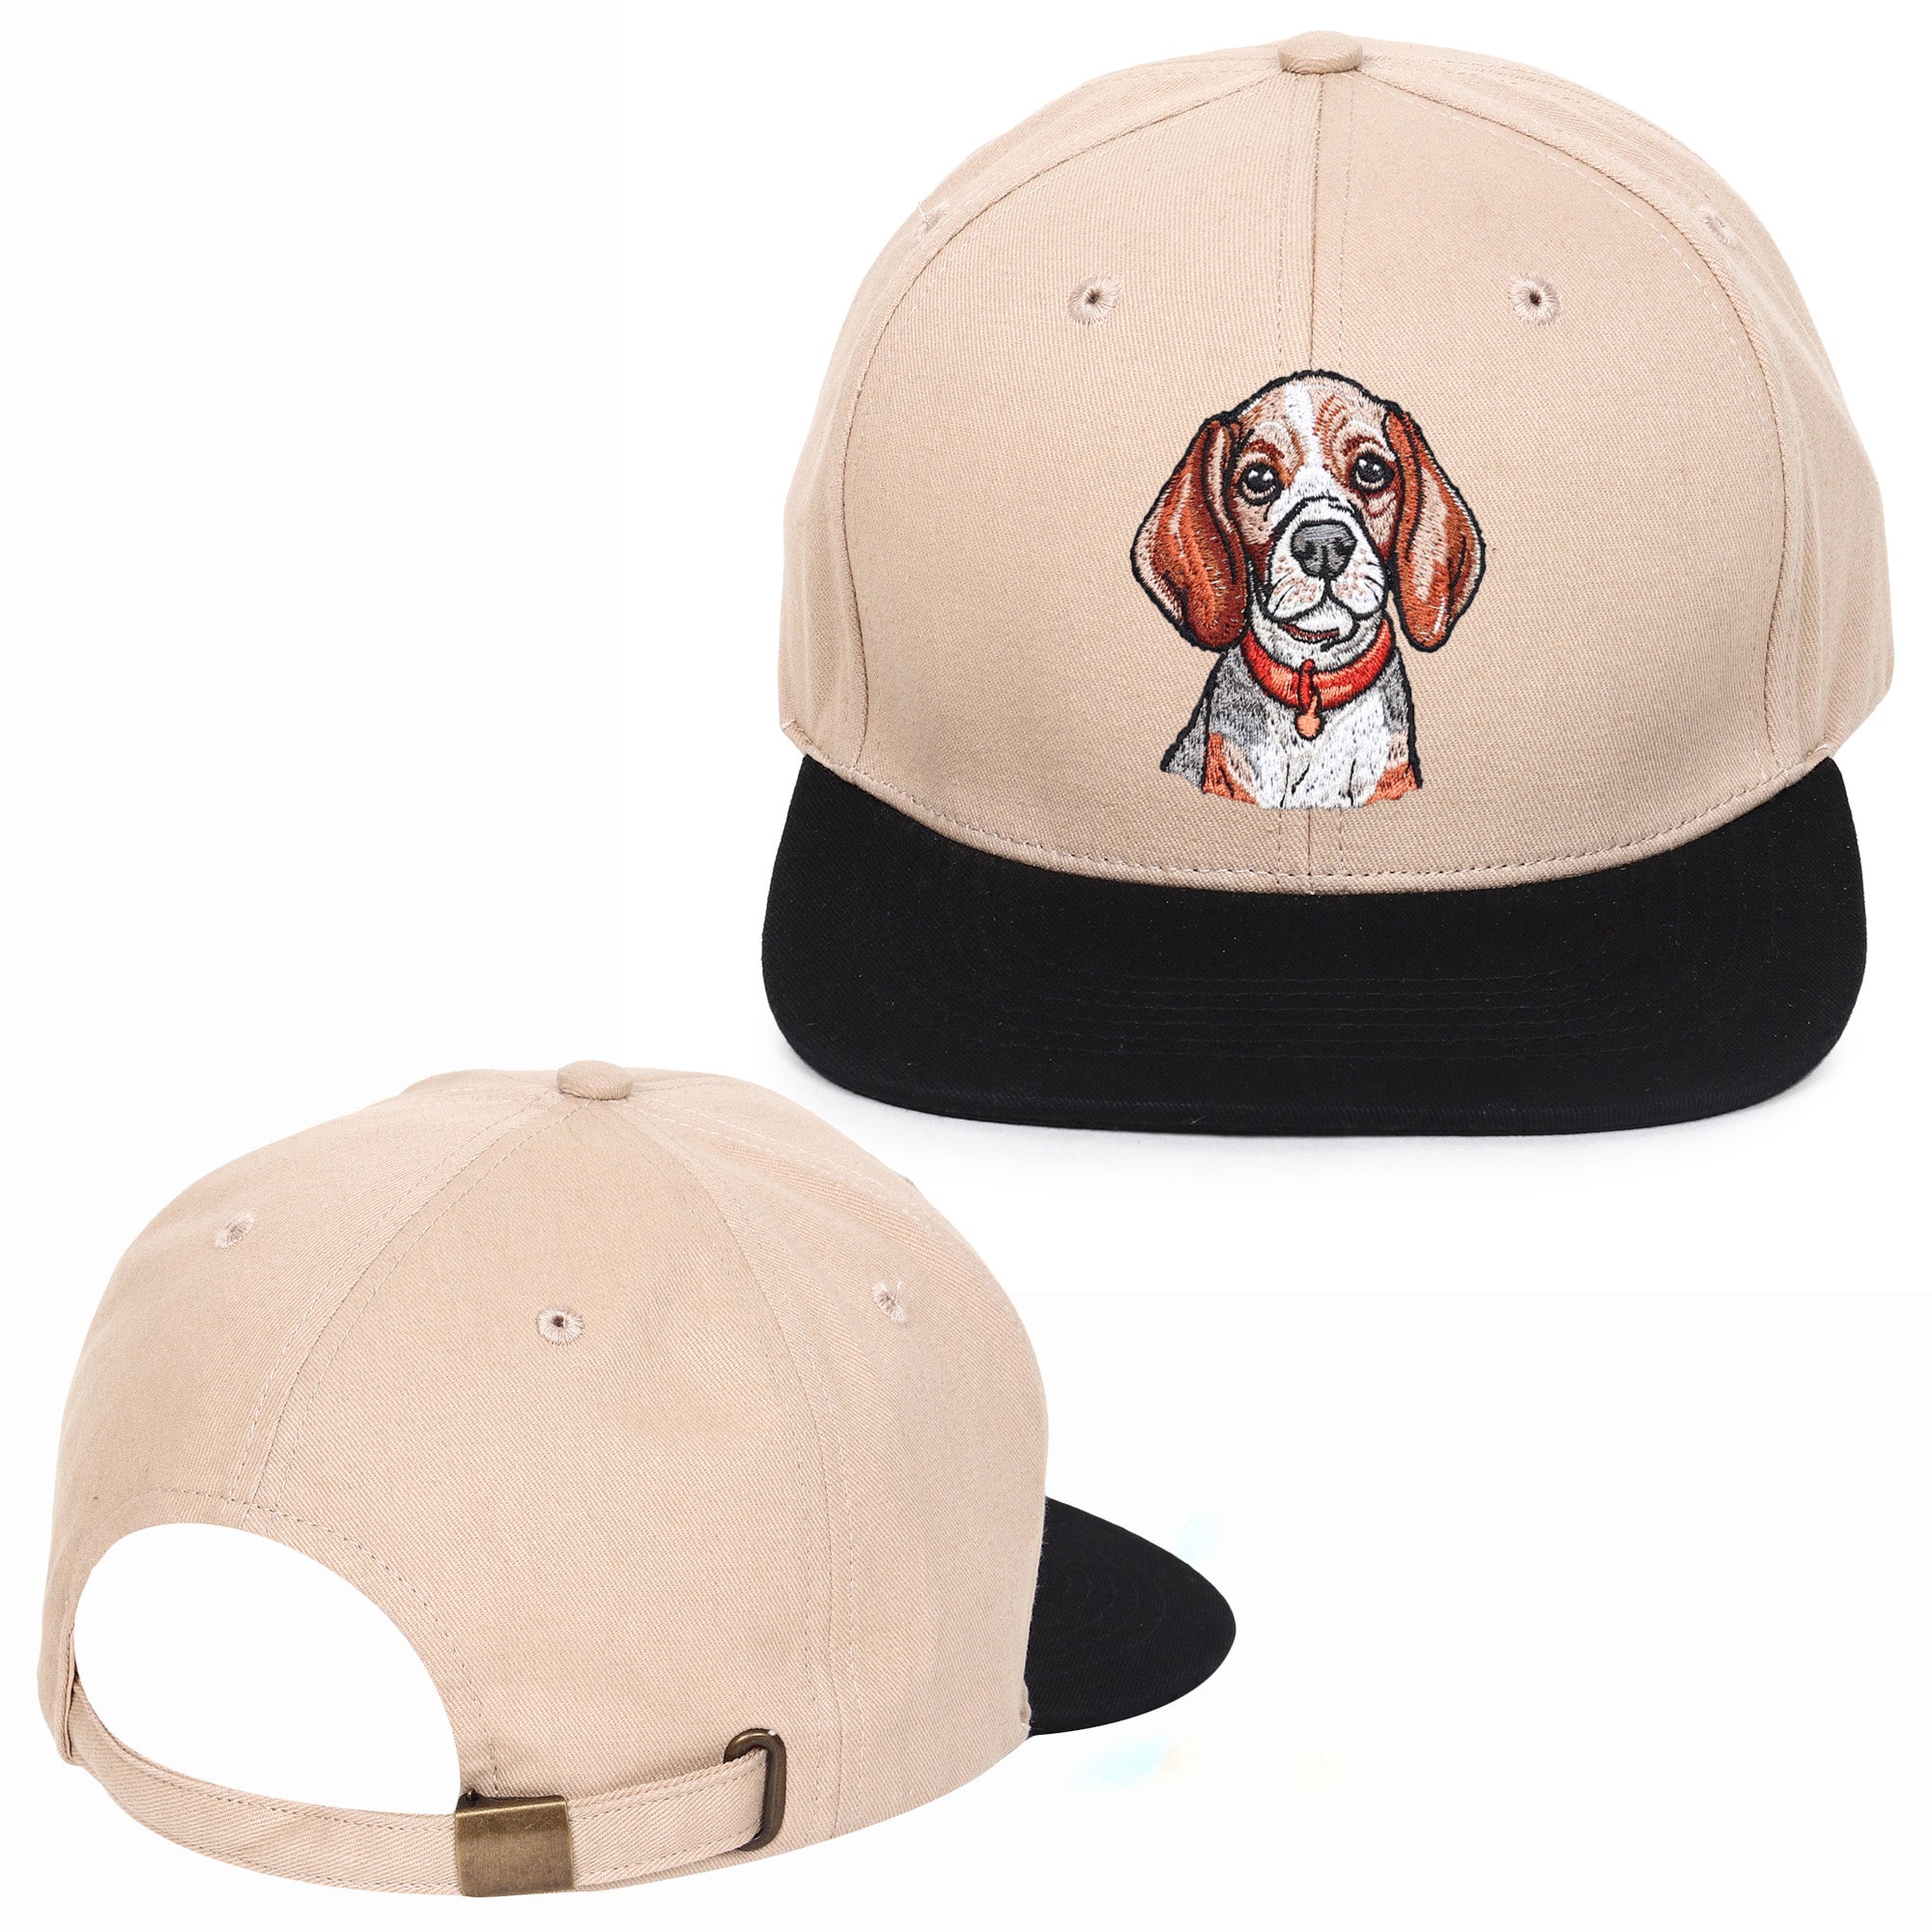 Hound Dog Embroidered Hip Hop Caps